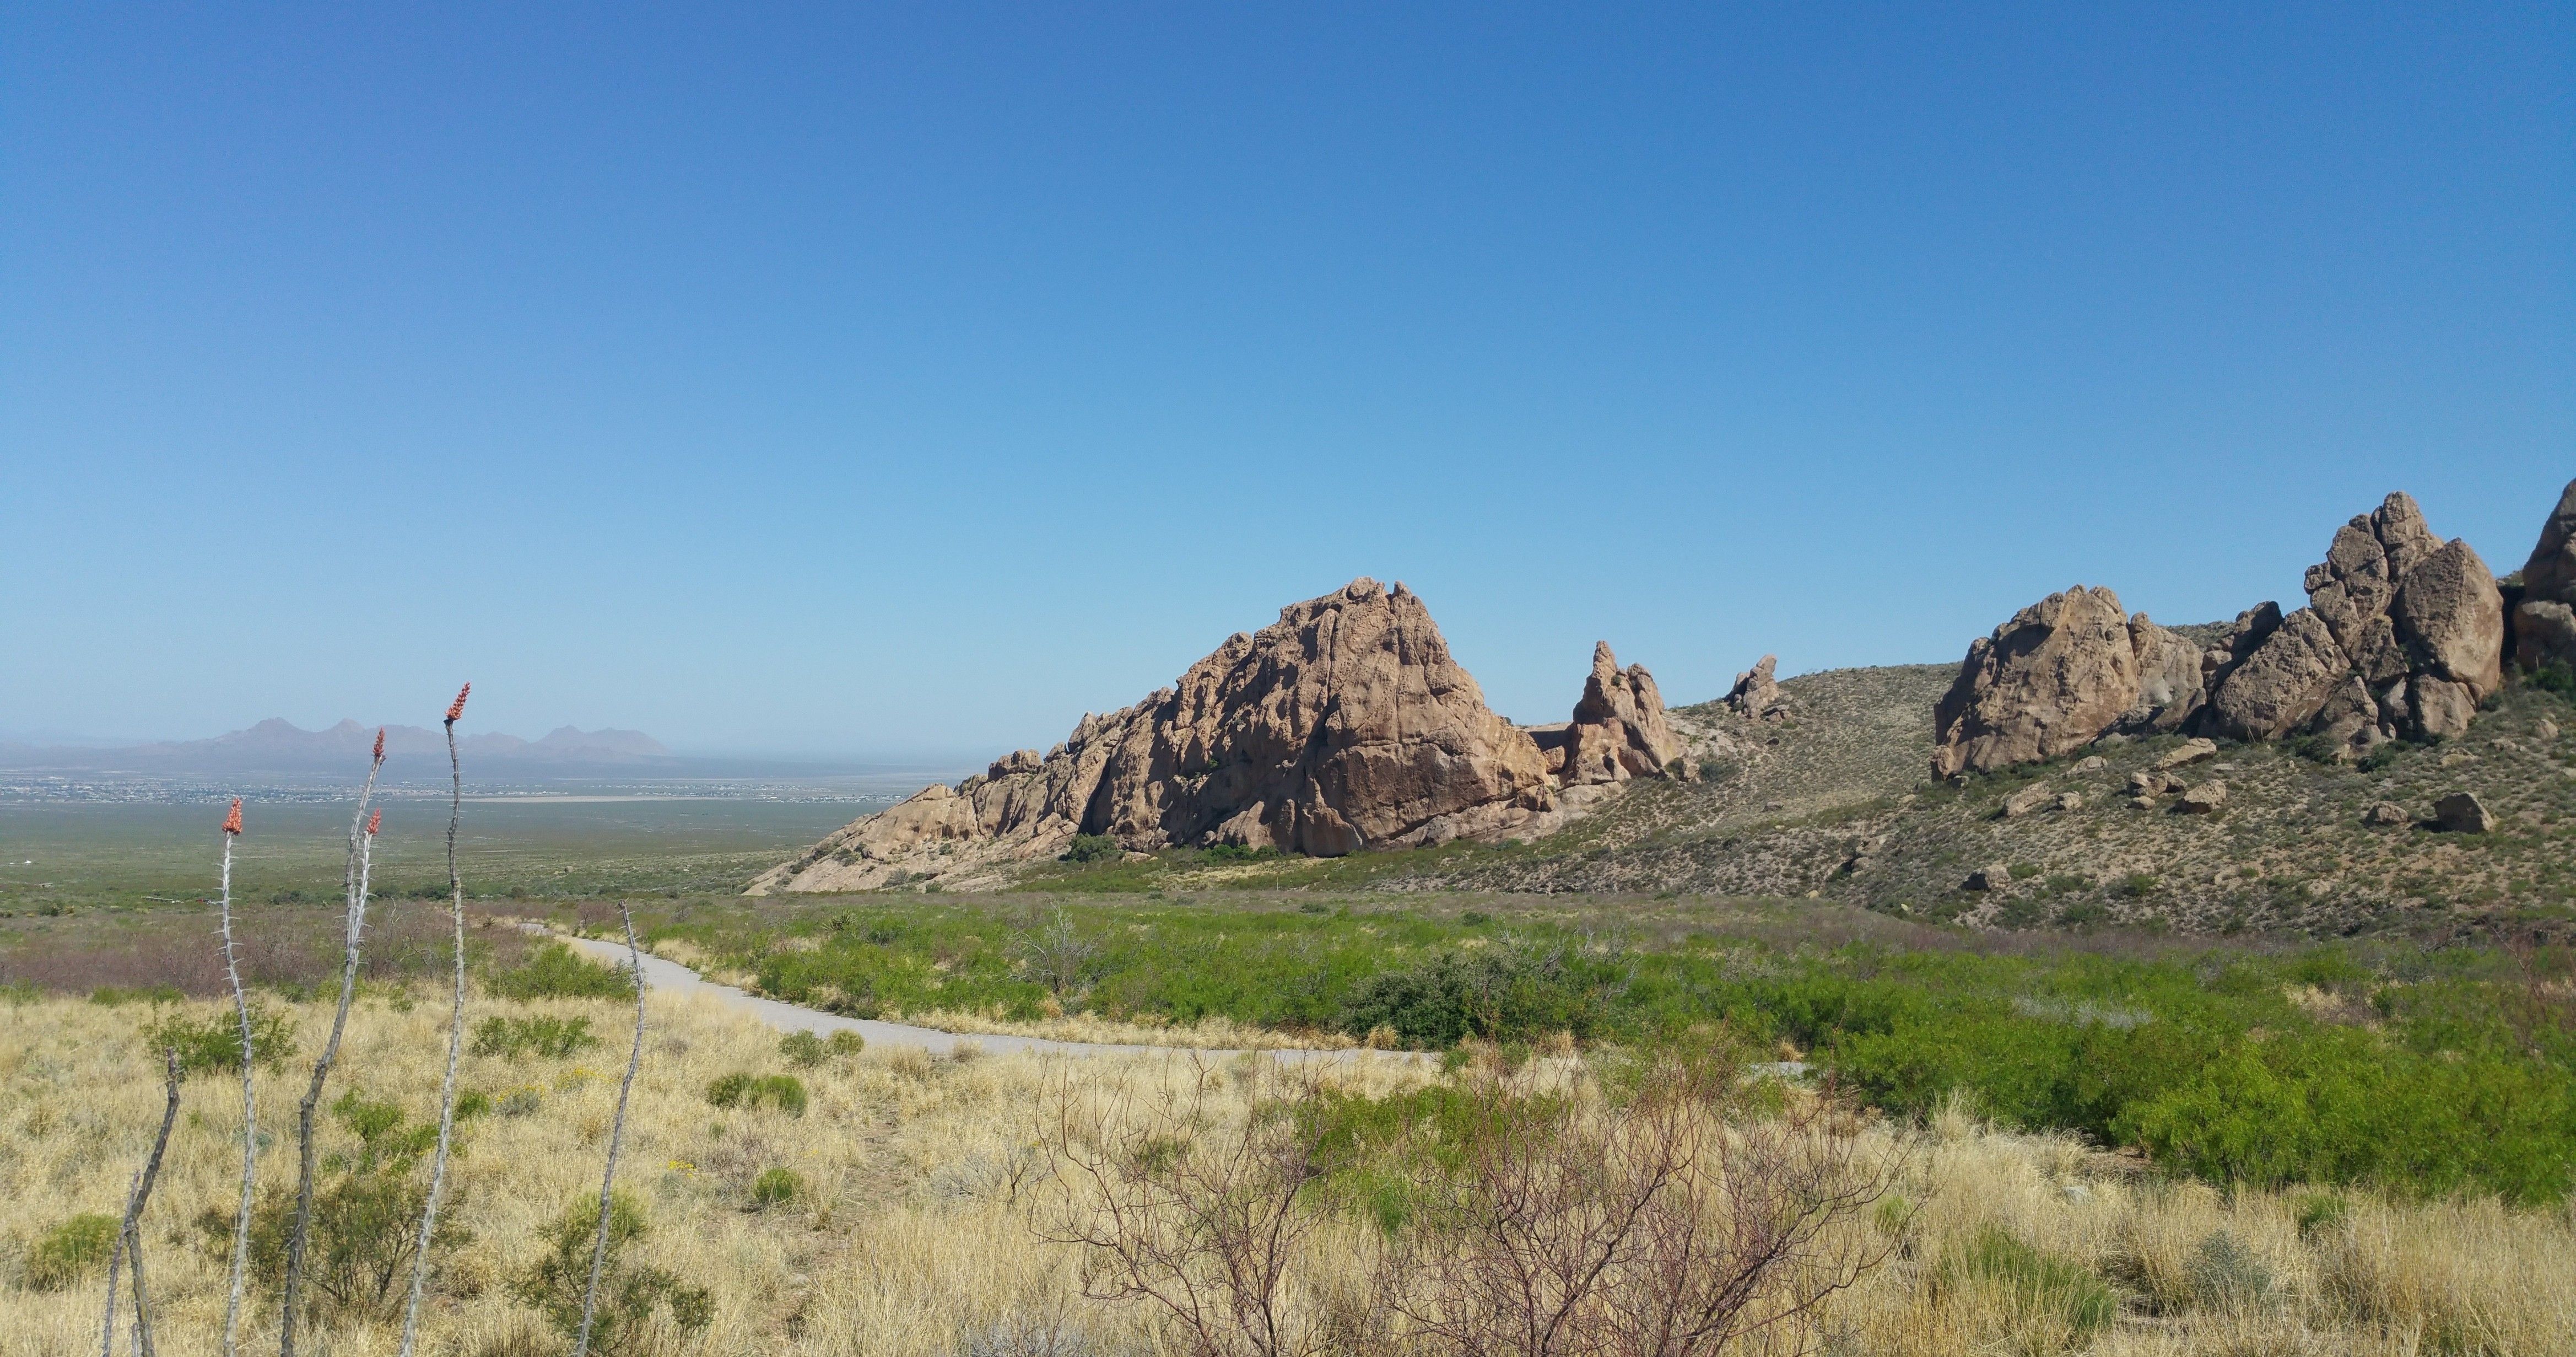 Download 4675x2462 New Mexico, Clean Sky, Rocks, Plants, Grass